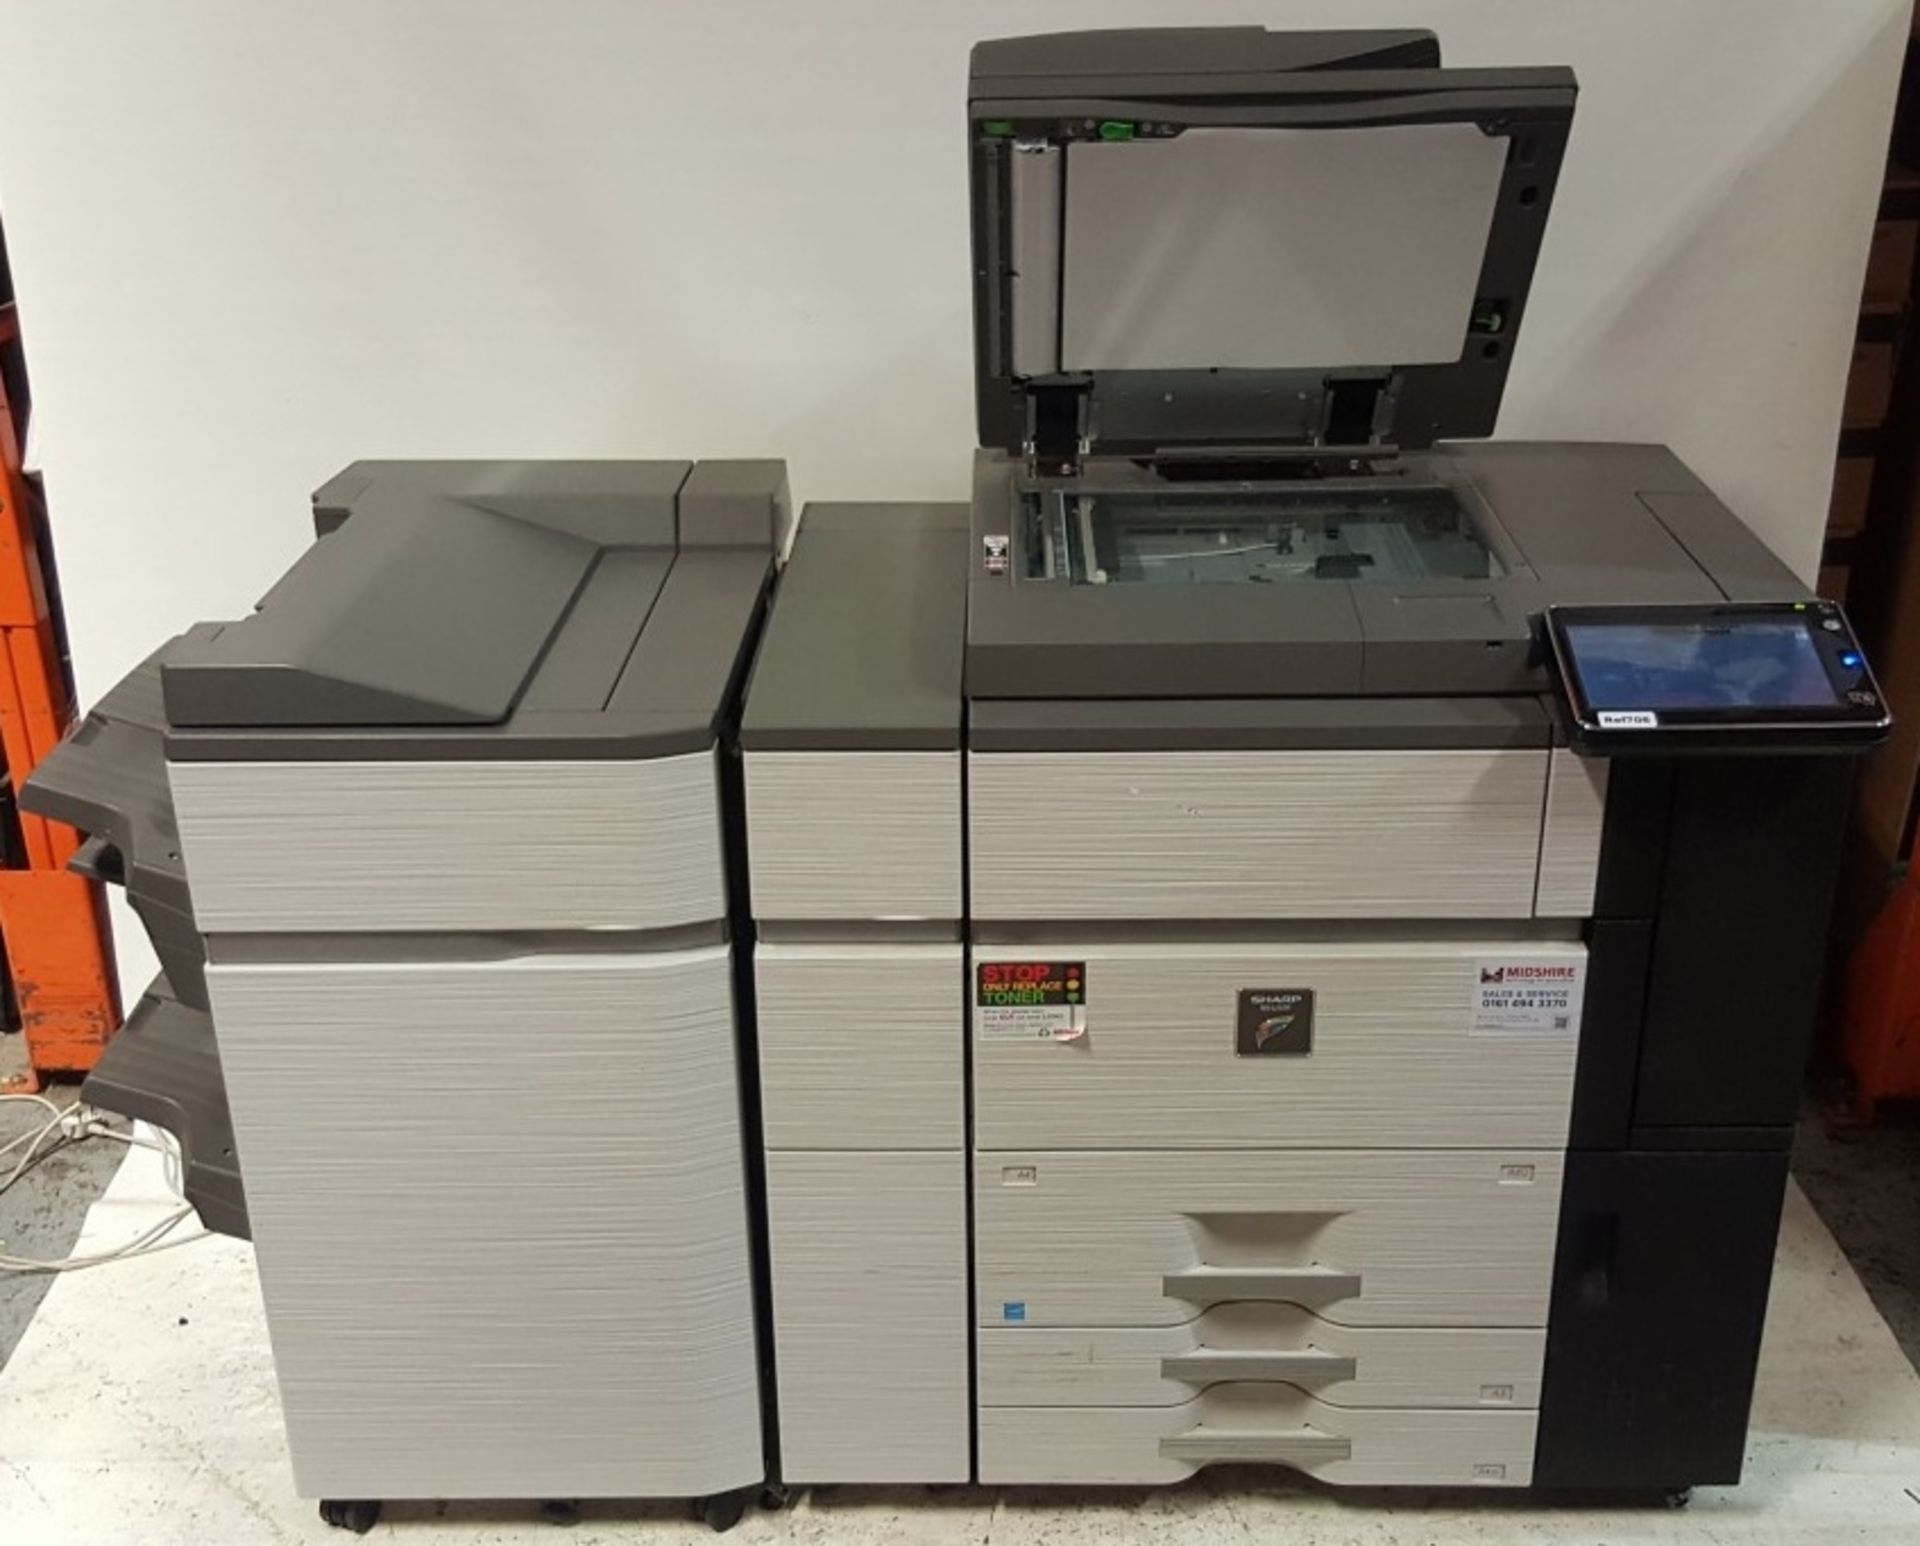 1 x Sharp MX6240N Office Photocopier Printer With Saddle Stitch Finisher & Curl Correction Unit - - Image 5 of 9